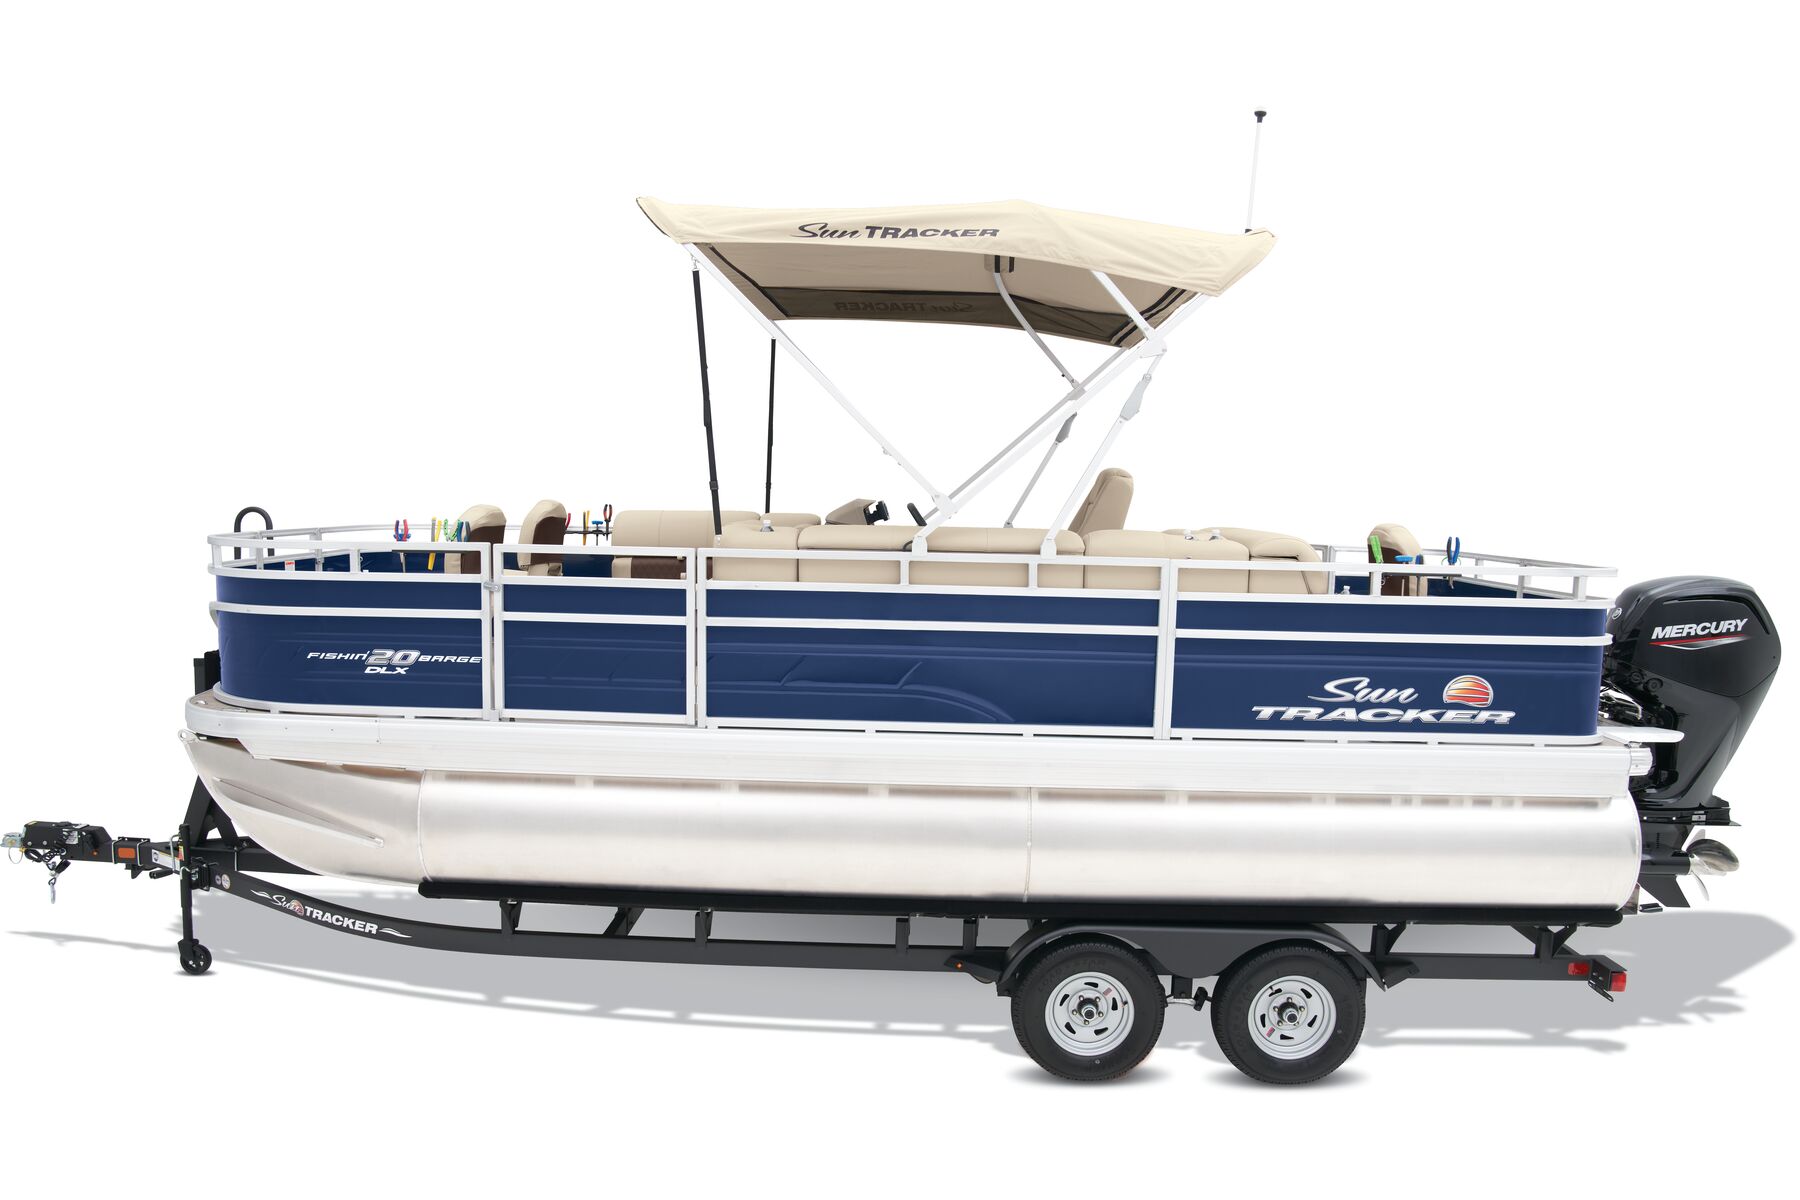 FISHIN' BARGE 20 DLX - SUN TRACKER Fishing Pontoon Boat